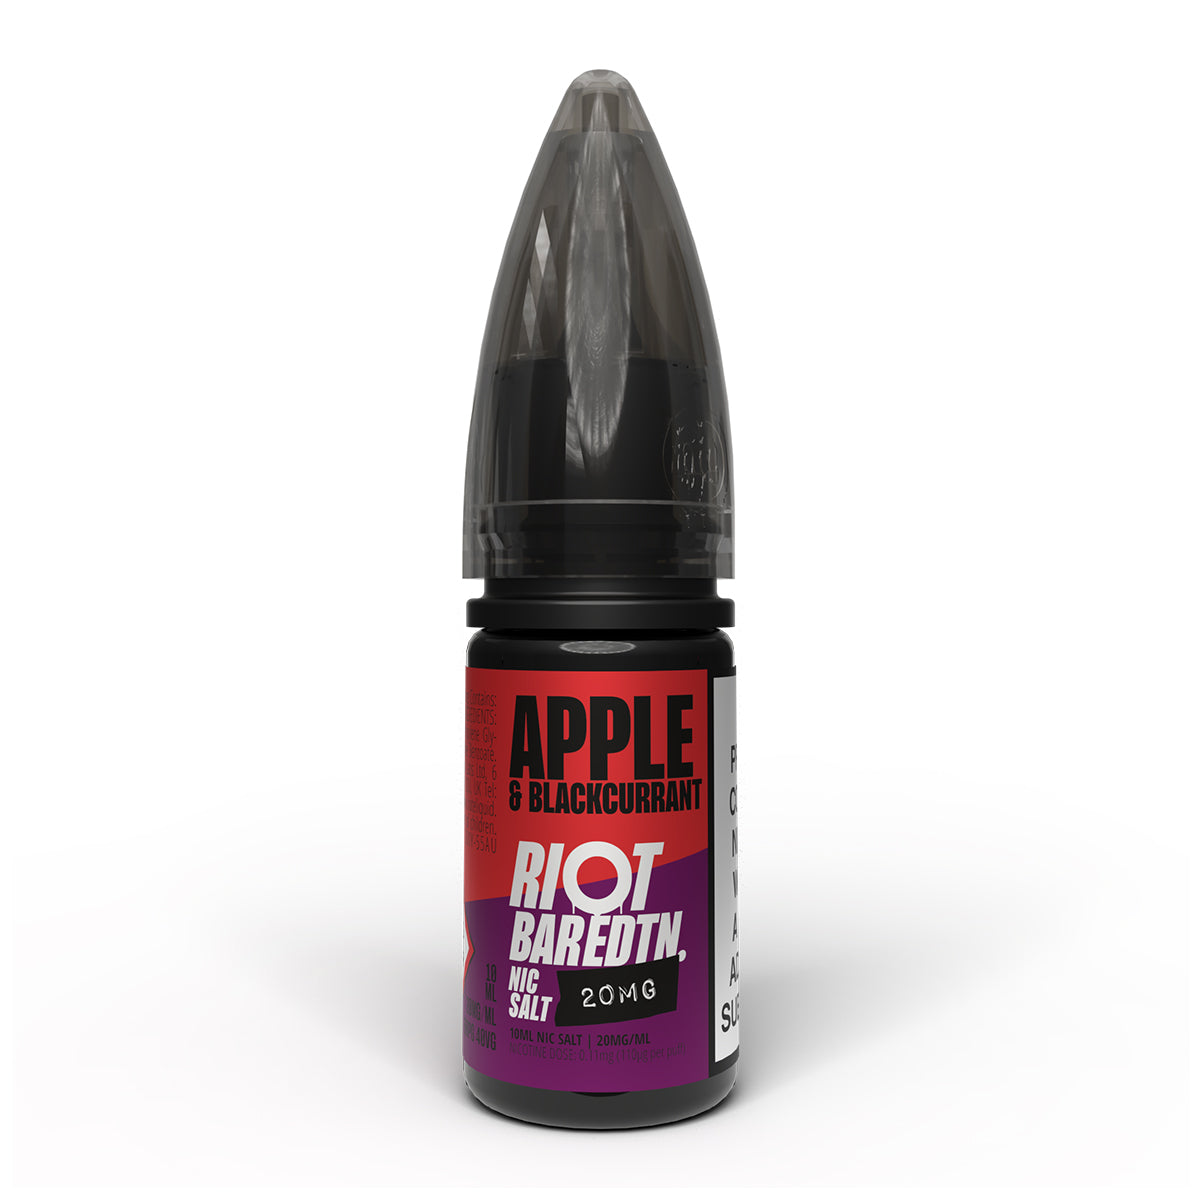 Apple & Blackcurrant 10ml Nicotine Salt 20mg by Riot Bar Edtn